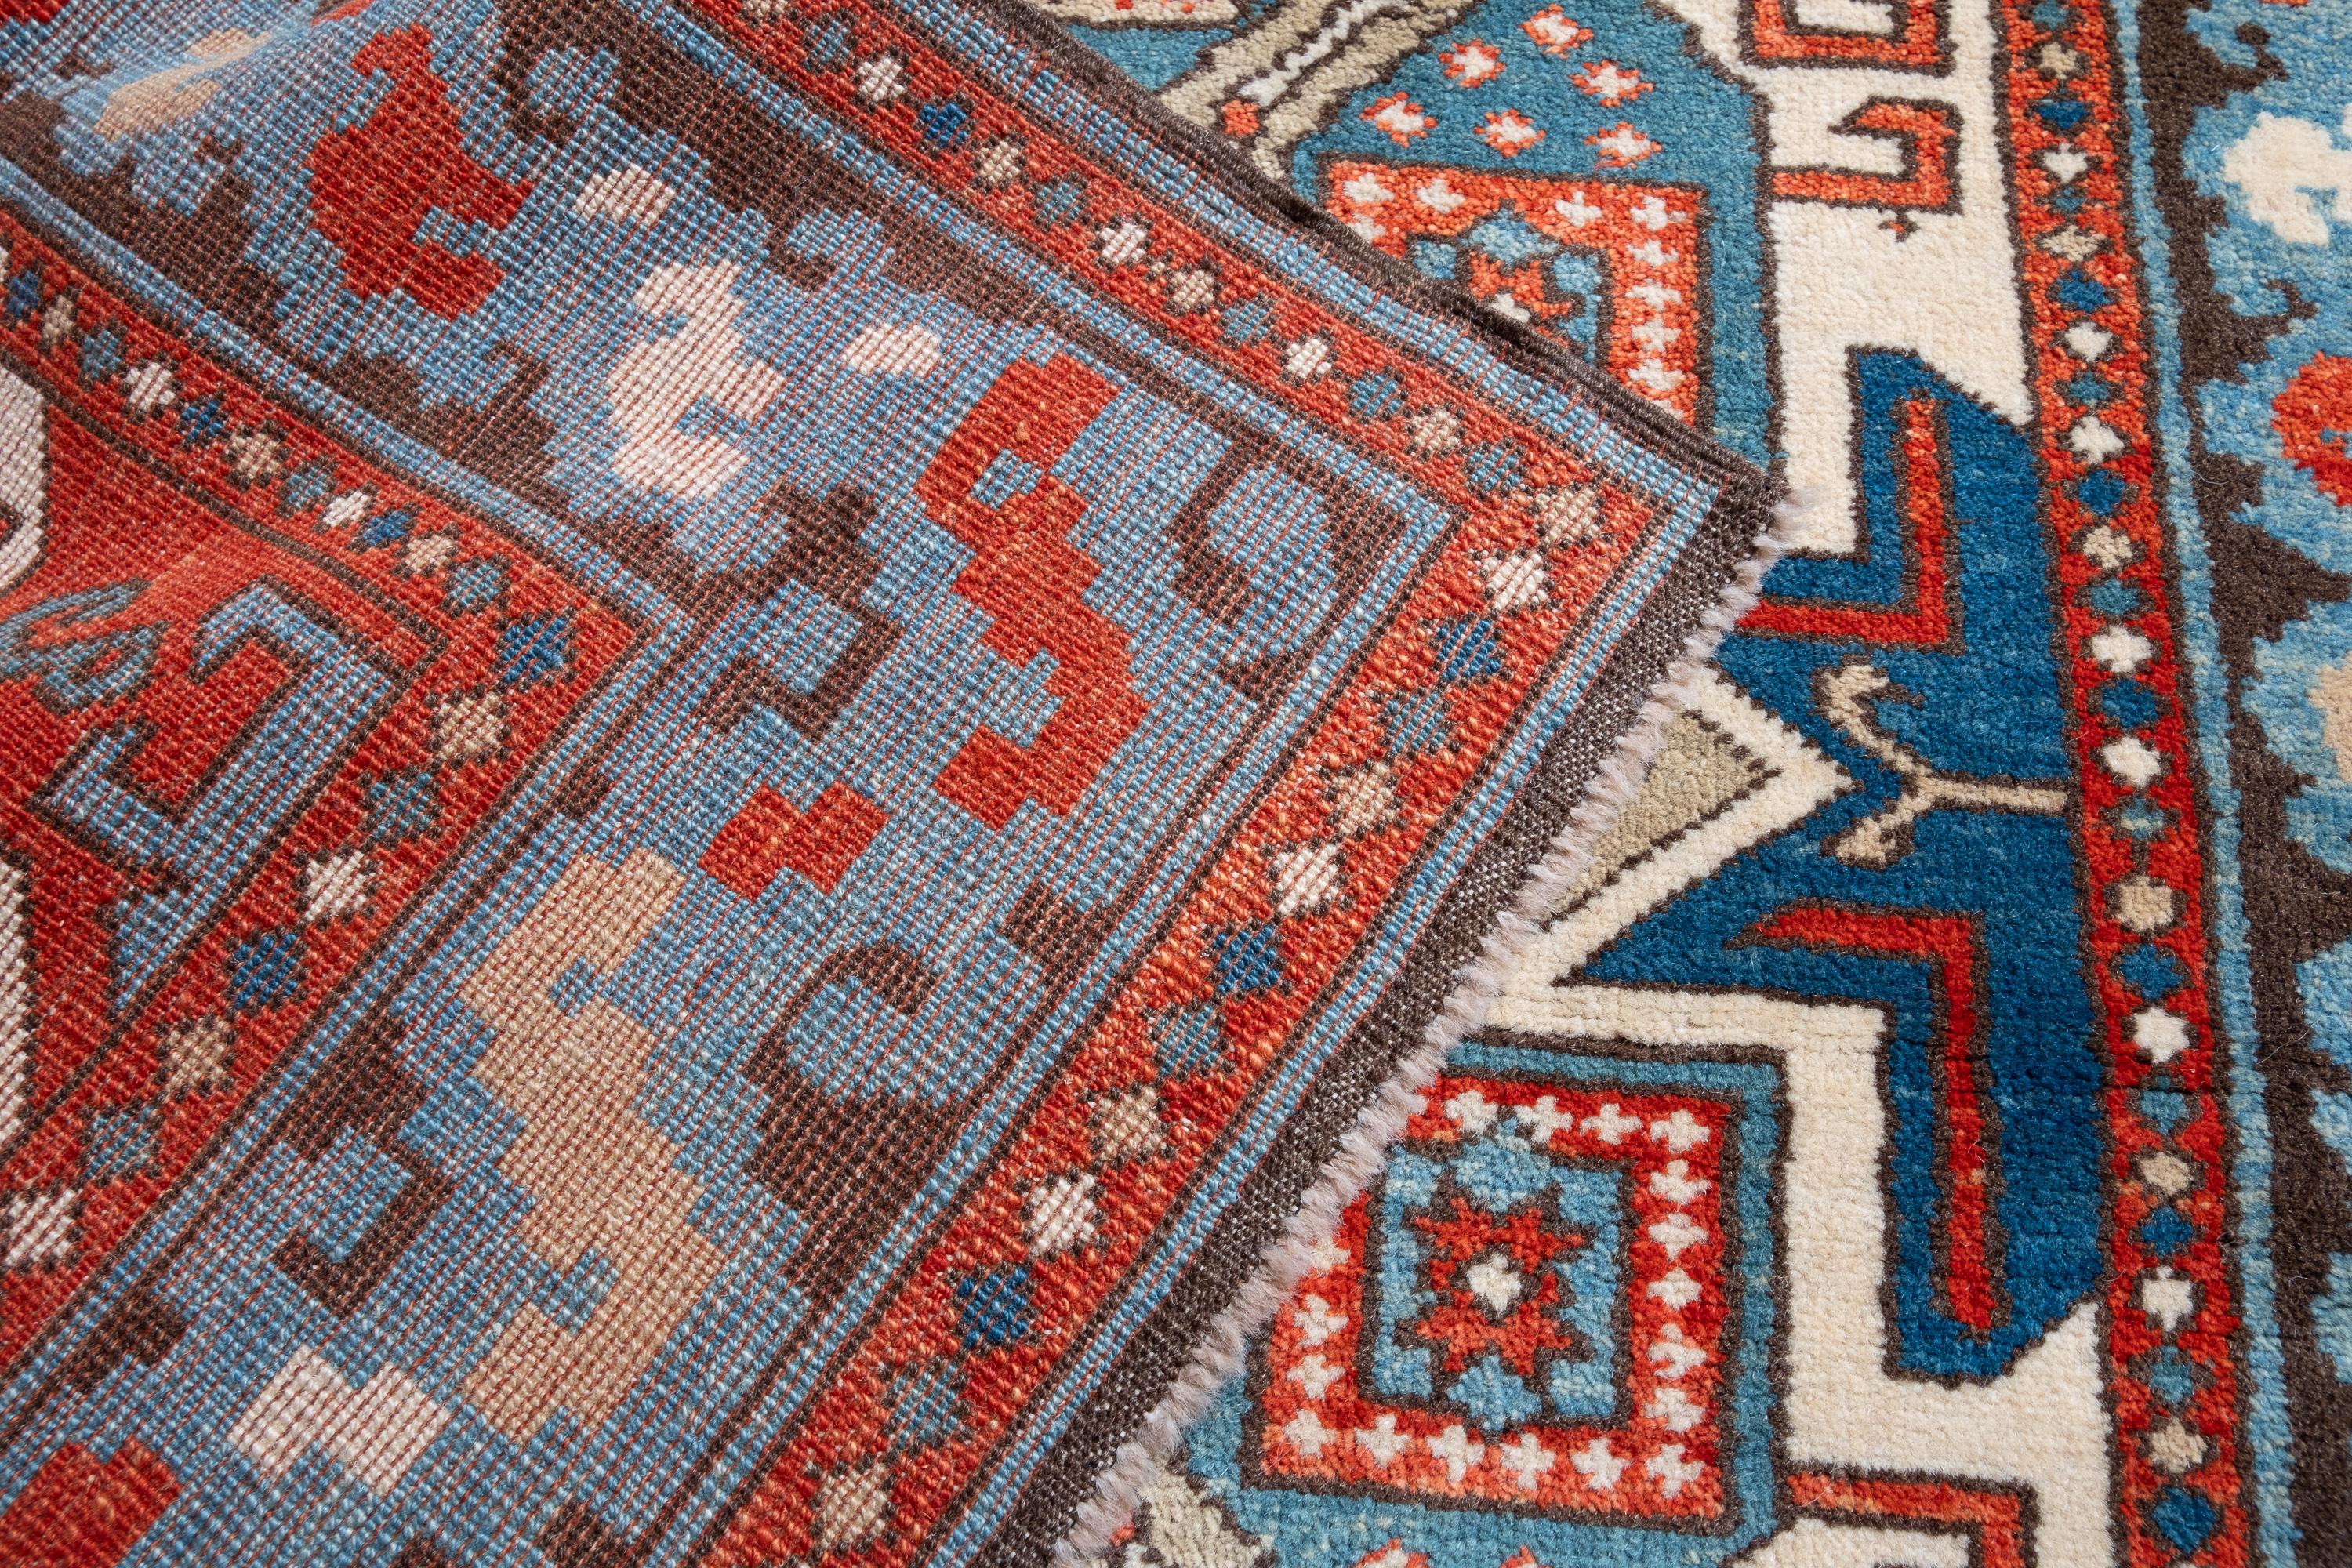 Turkish Ararat Rugs Star Kazak Rug Caucasian 19th C. Antique Revival Carpet Natural Dyed For Sale